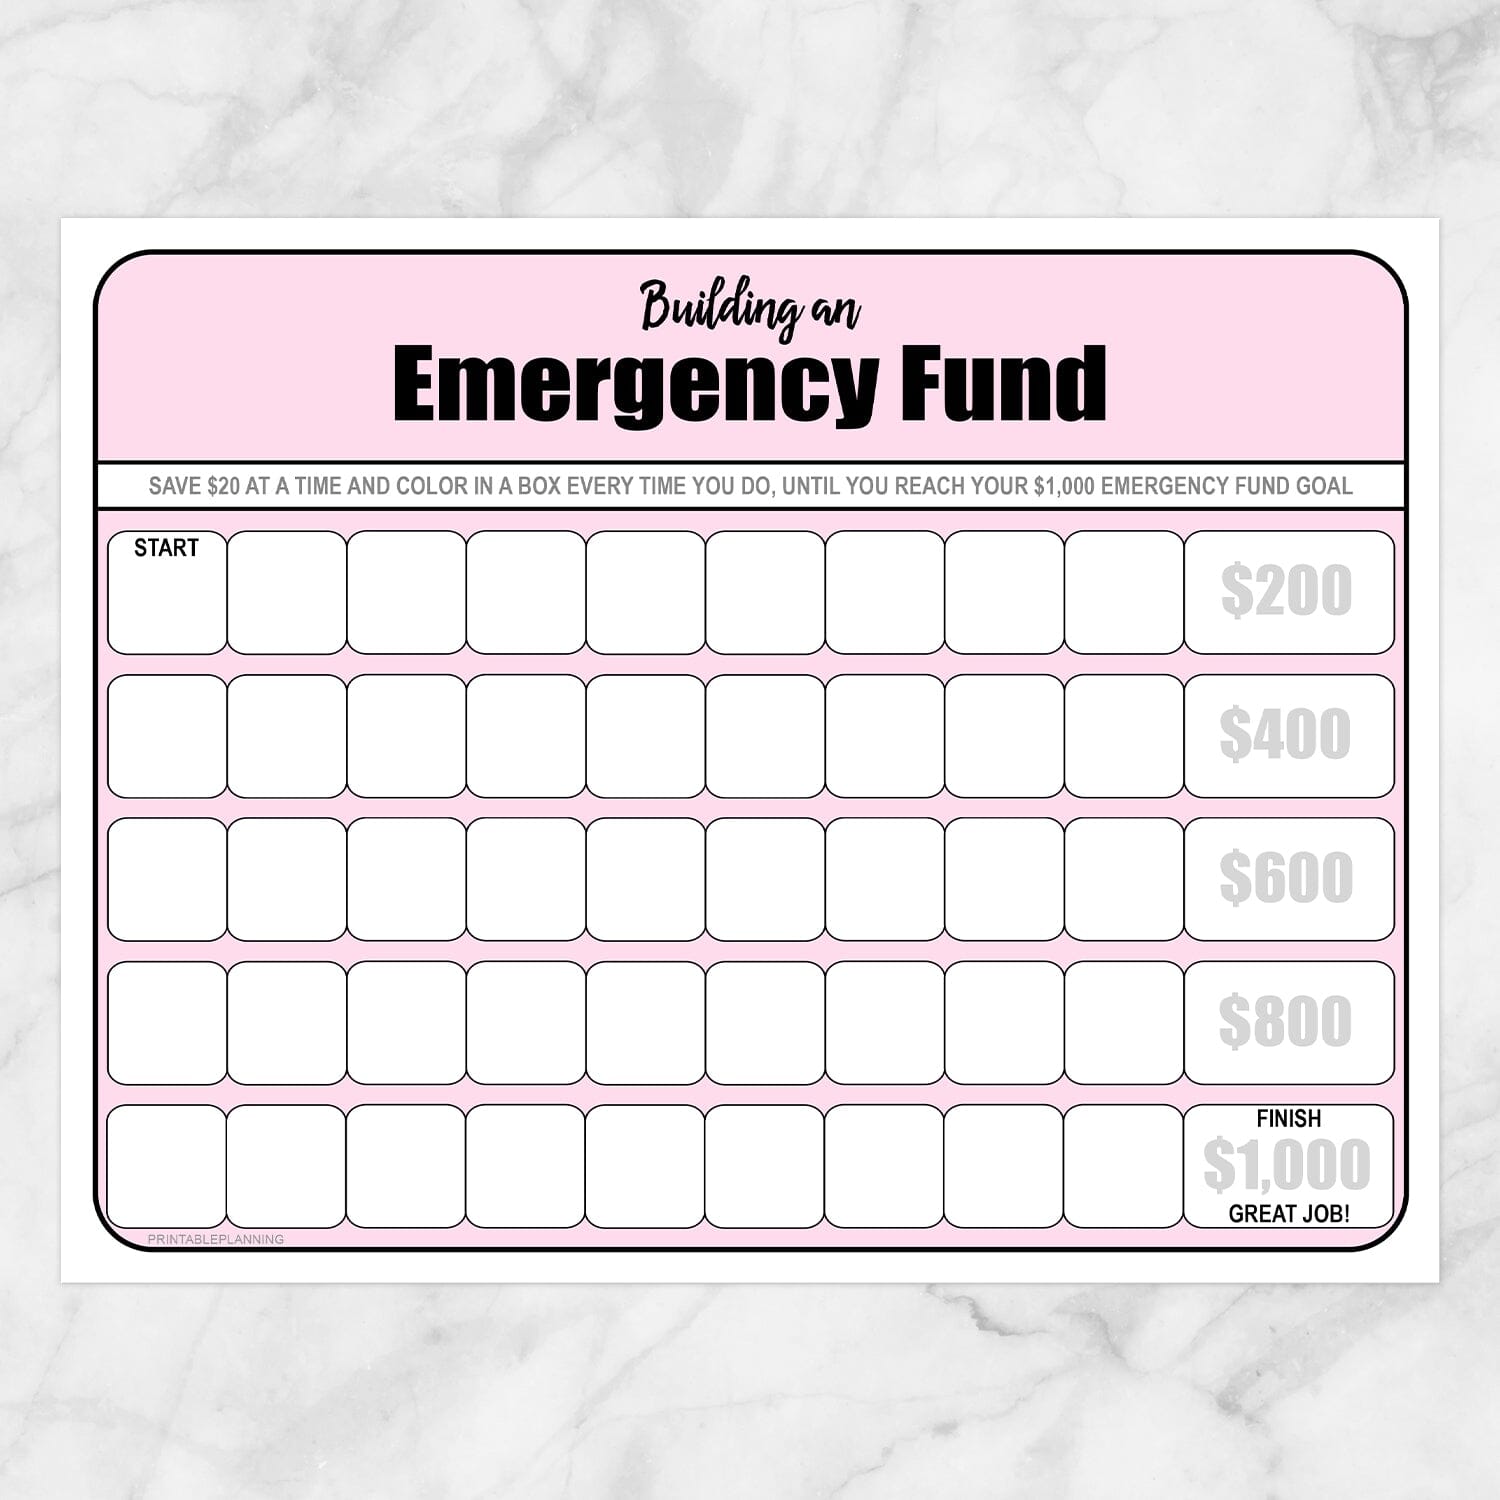 Printable Building an Emergency Fund Worksheet in Pink (by $20 increments) at Printable Planning.